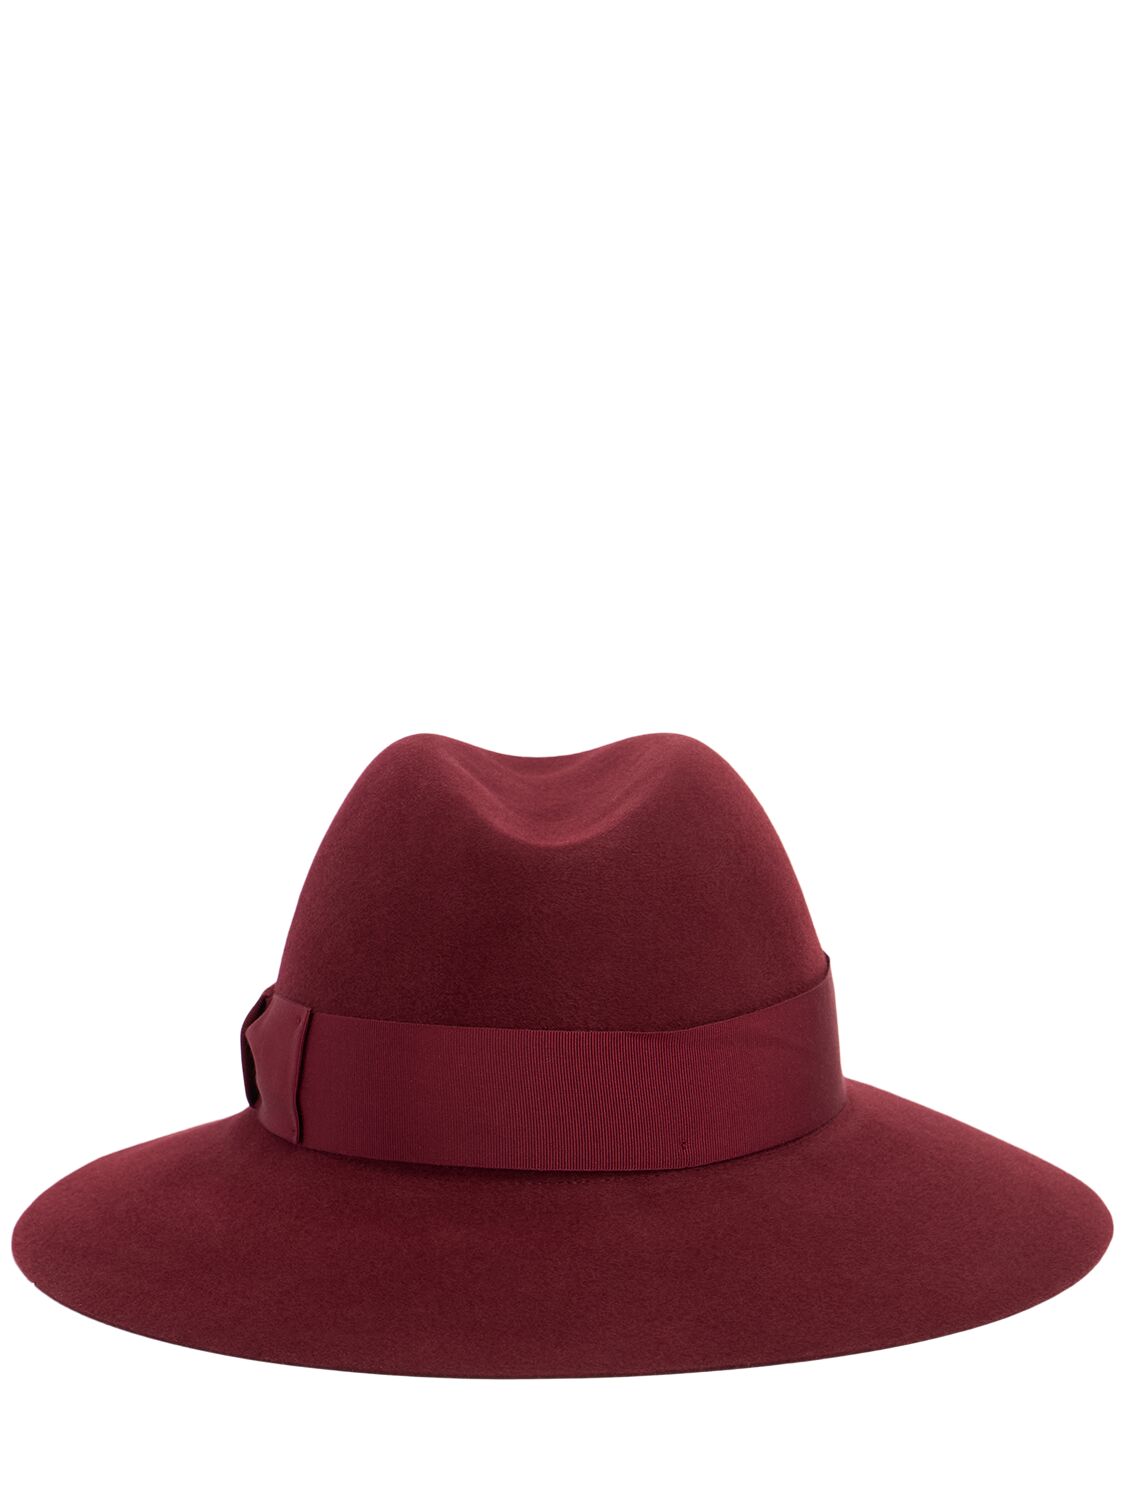 Borsalino Claudette Felt Hat In Burgundy